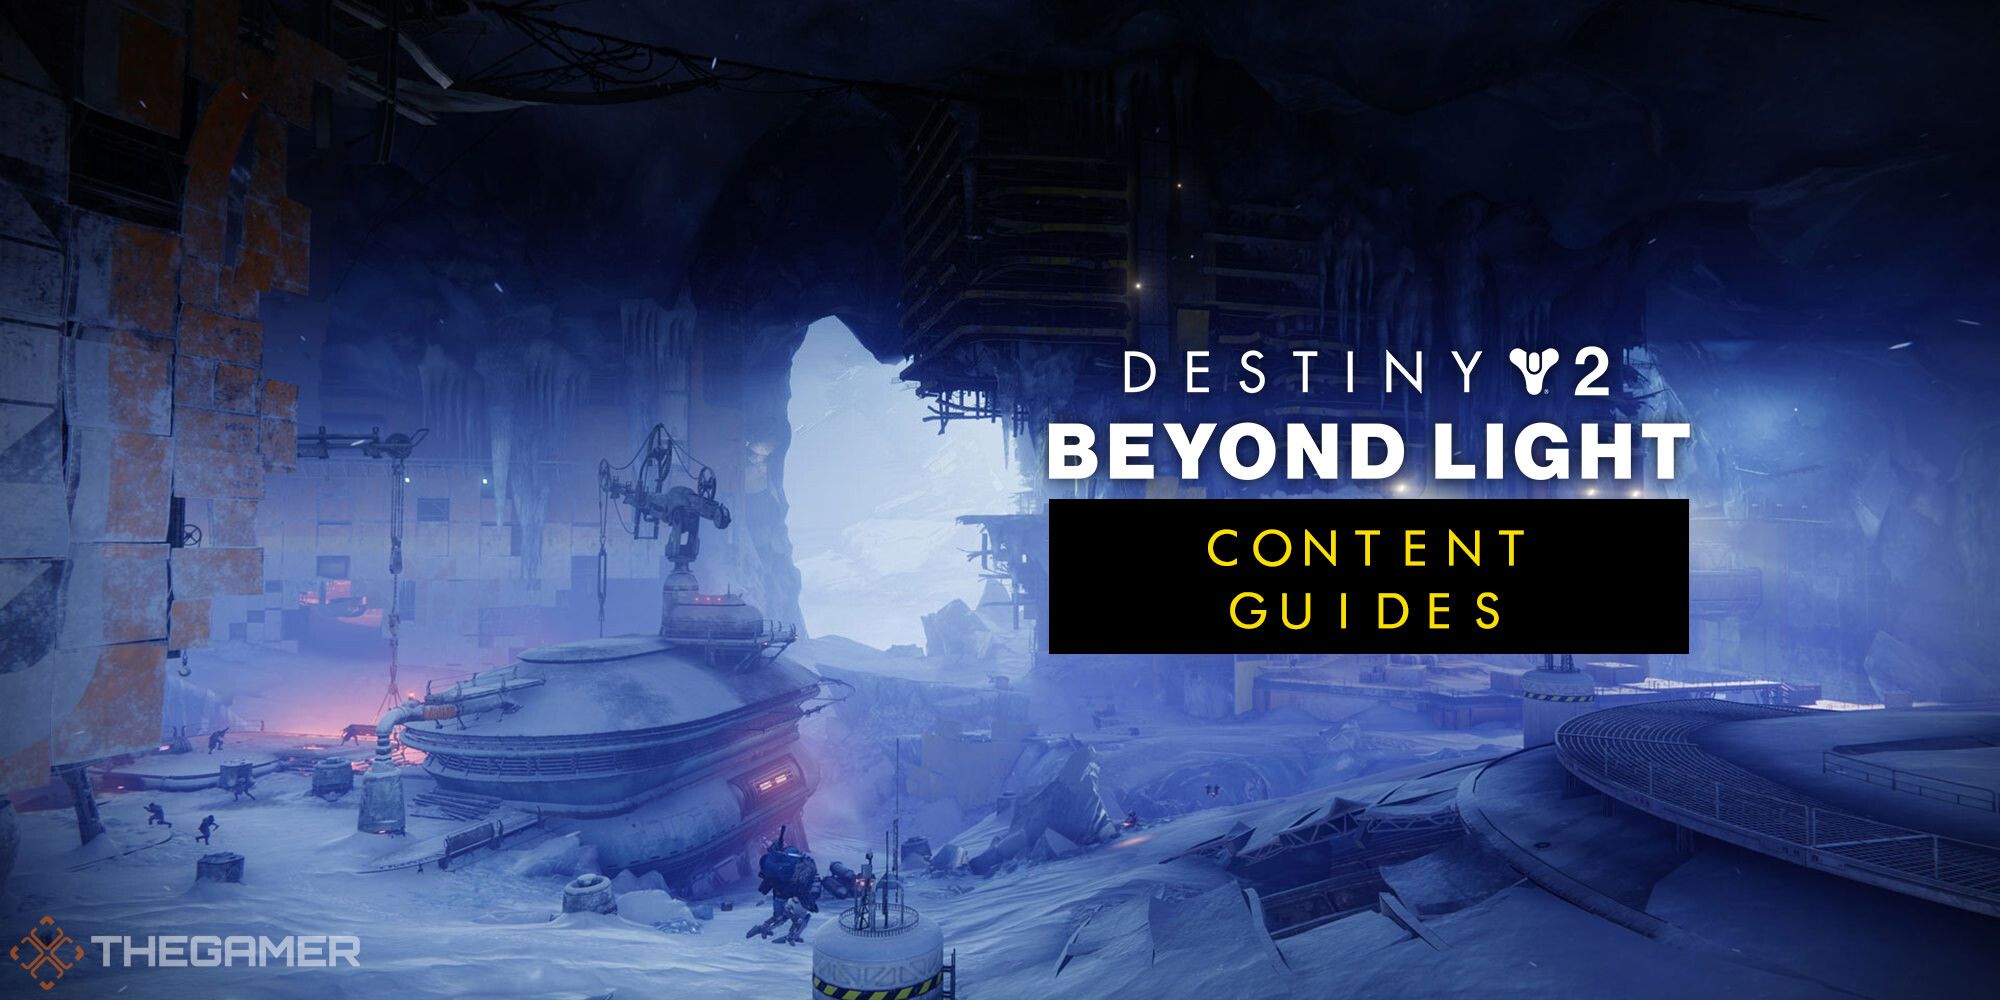 Destiny 2 - Beyond Light Content Guides